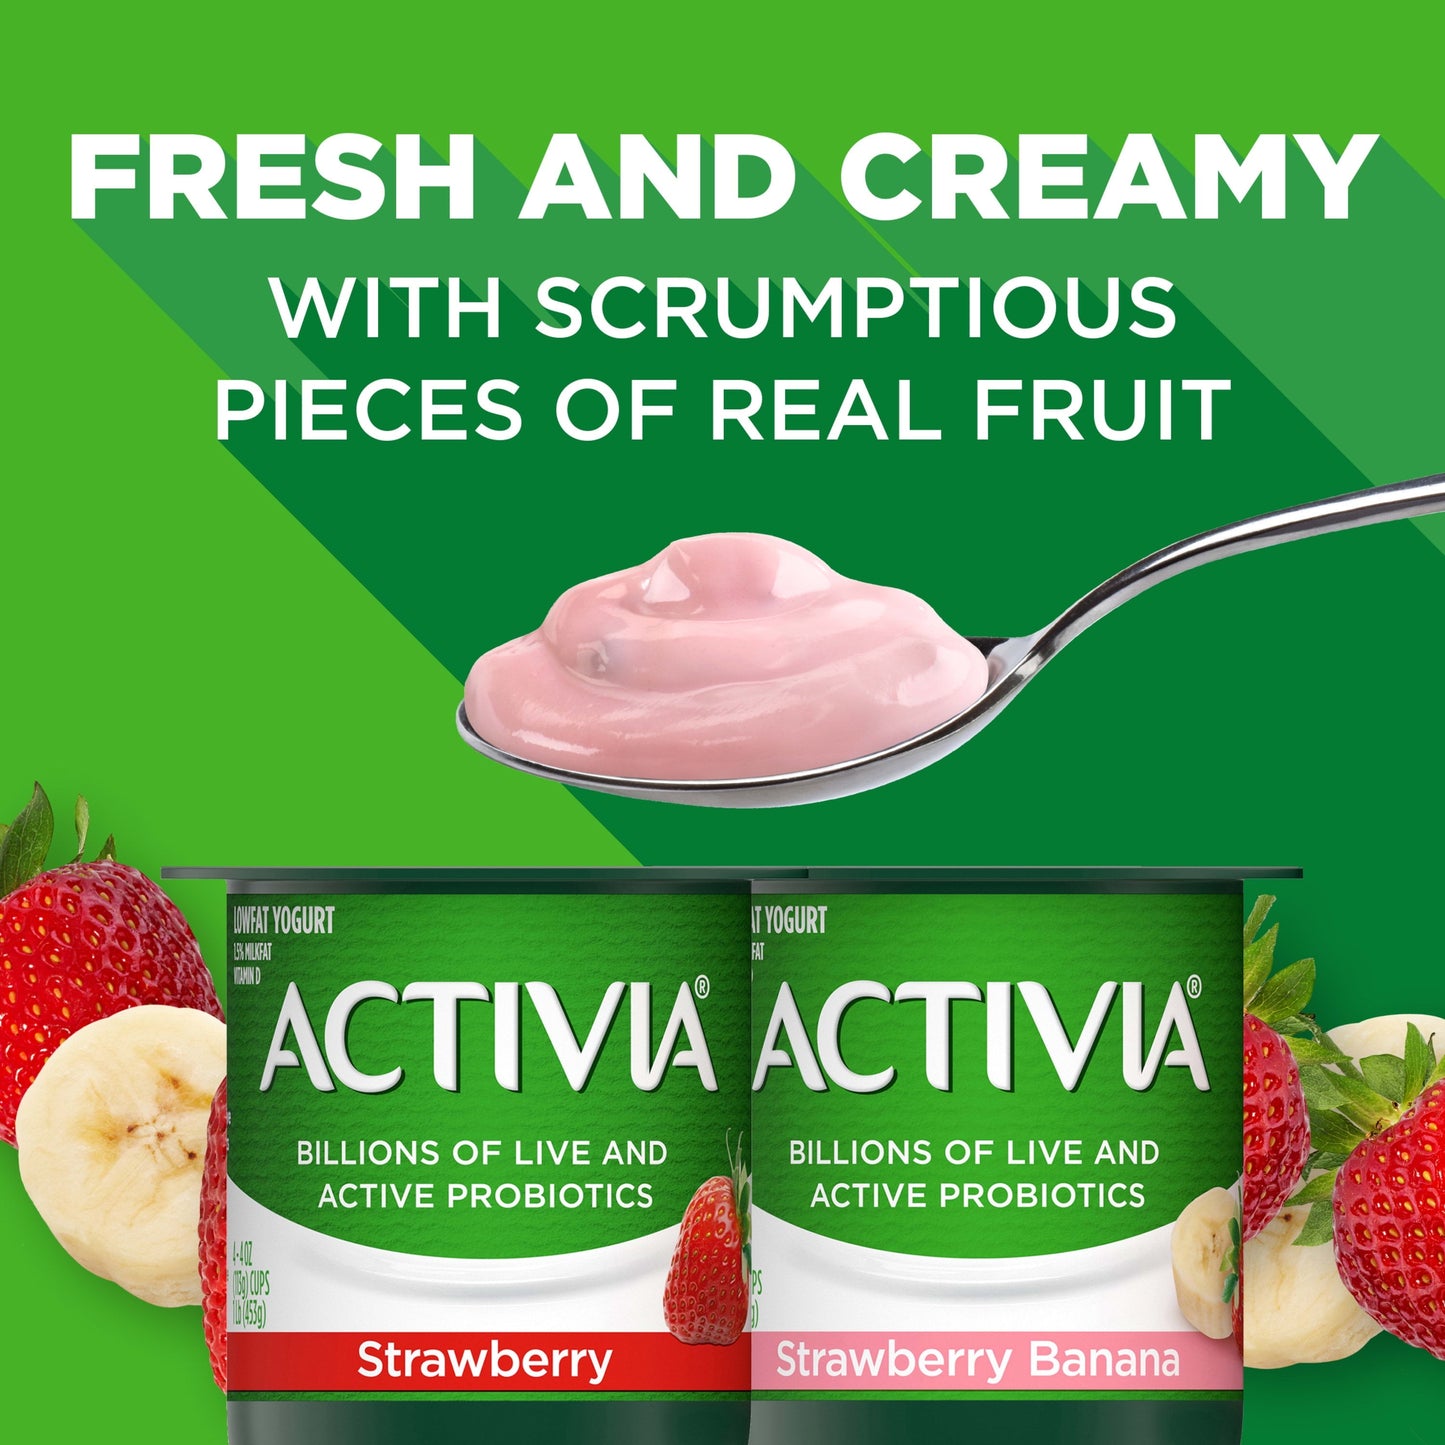 Activia Strawberry and Strawberry Banana Probiotic Yogurt, Lowfat Yogurt Cups, 4 oz, 12 Count